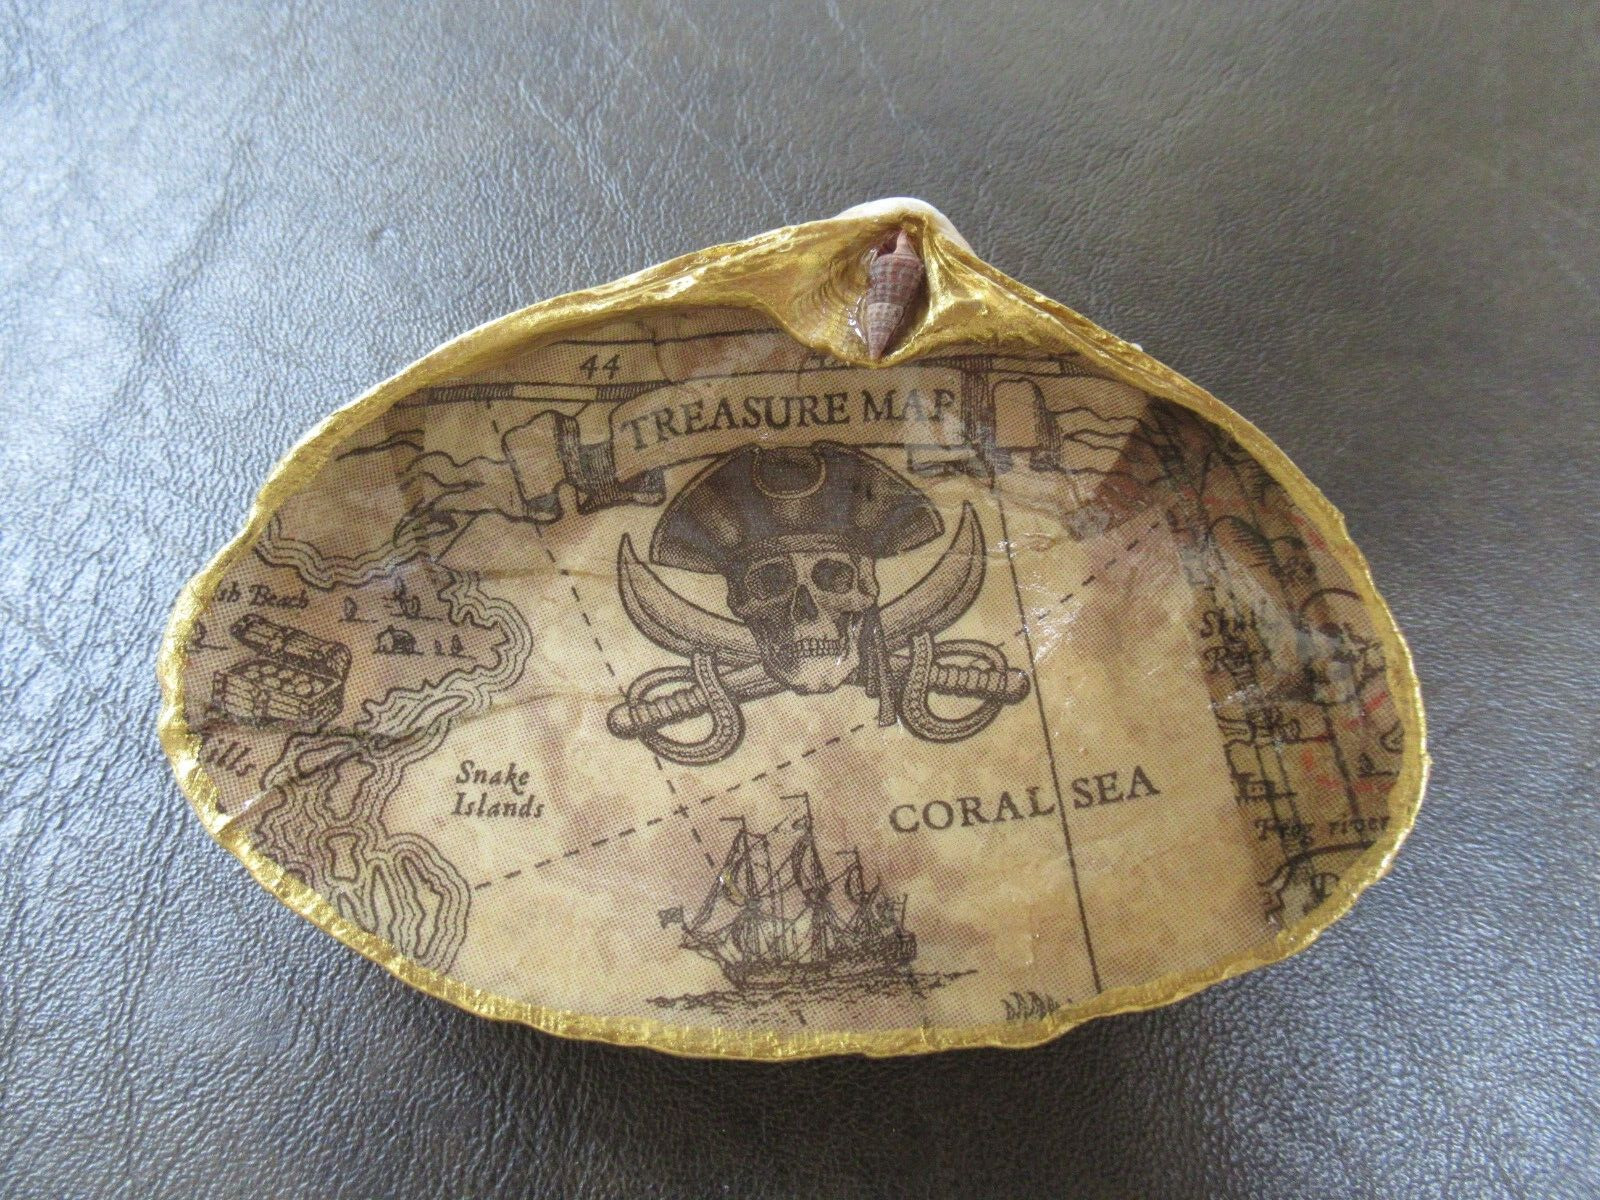 Decoupaged Seashell  Pirates Treasure Map  Trinket Holder or Natural Display